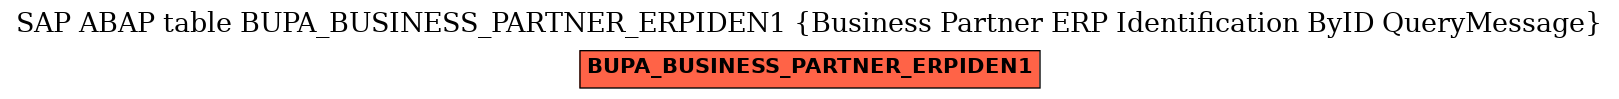 E-R Diagram for table BUPA_BUSINESS_PARTNER_ERPIDEN1 (Business Partner ERP Identification ByID QueryMessage)